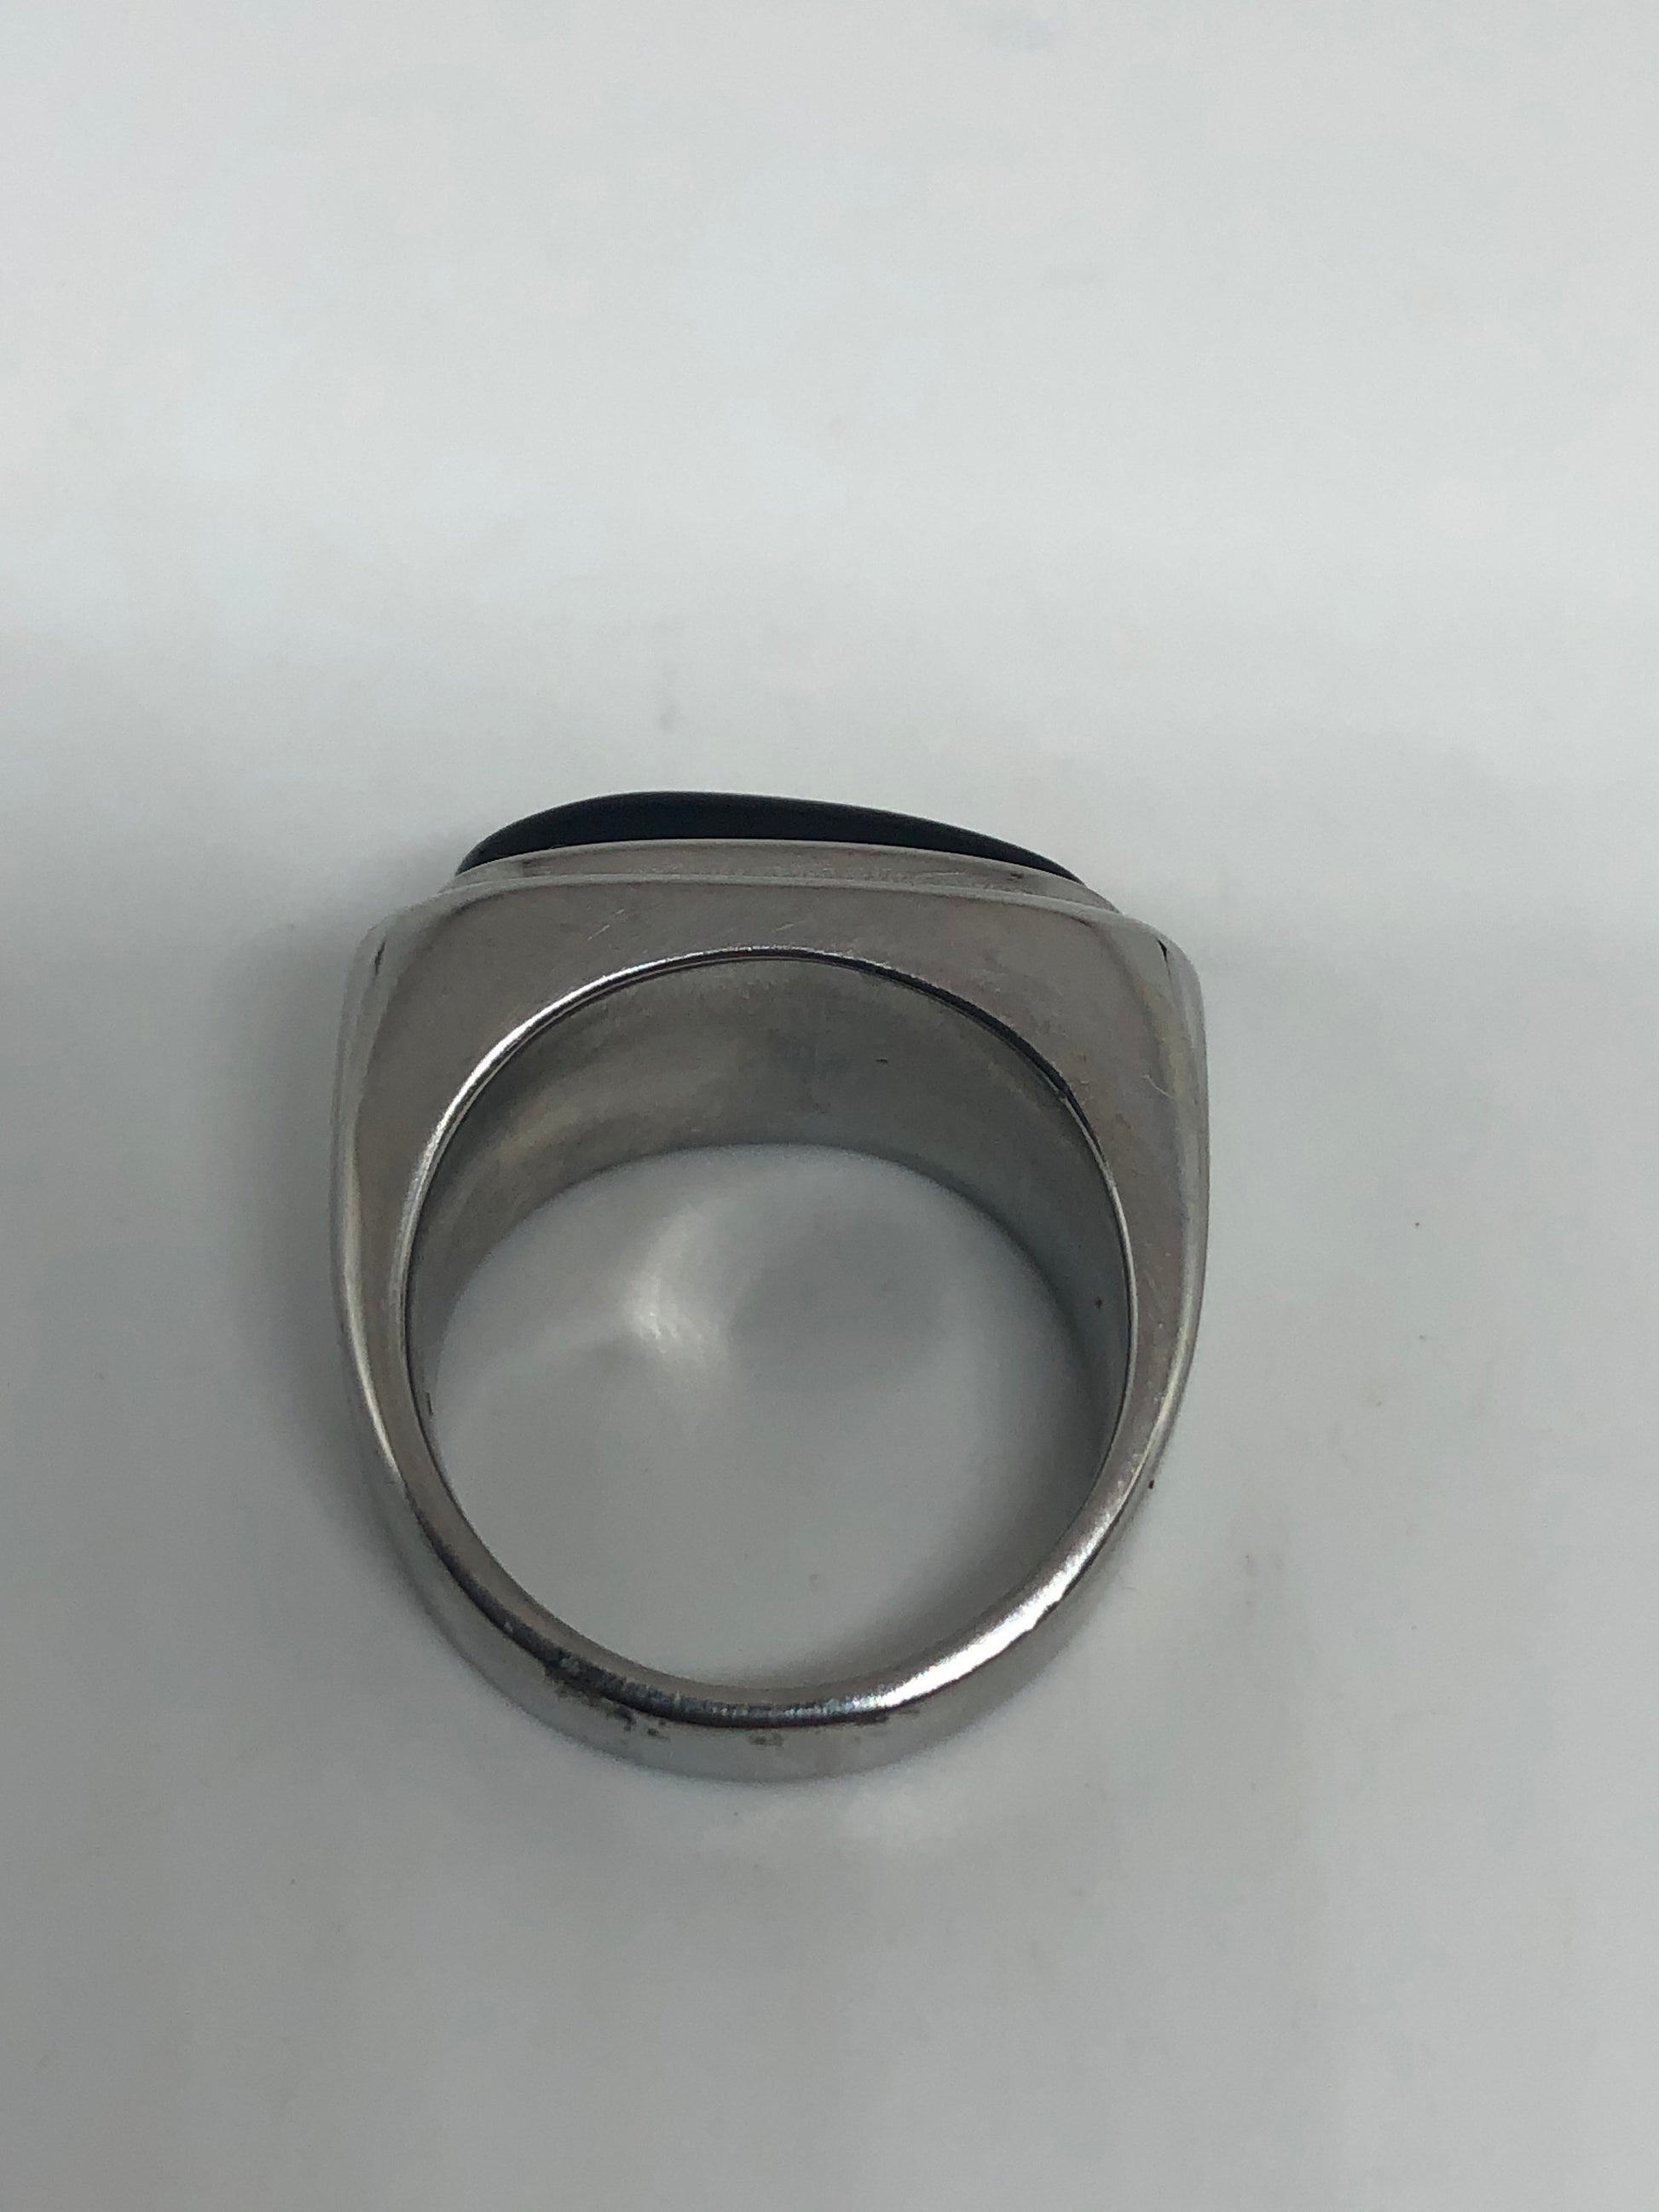 Vintage Black Onyx Stainless Steel Men's Ring